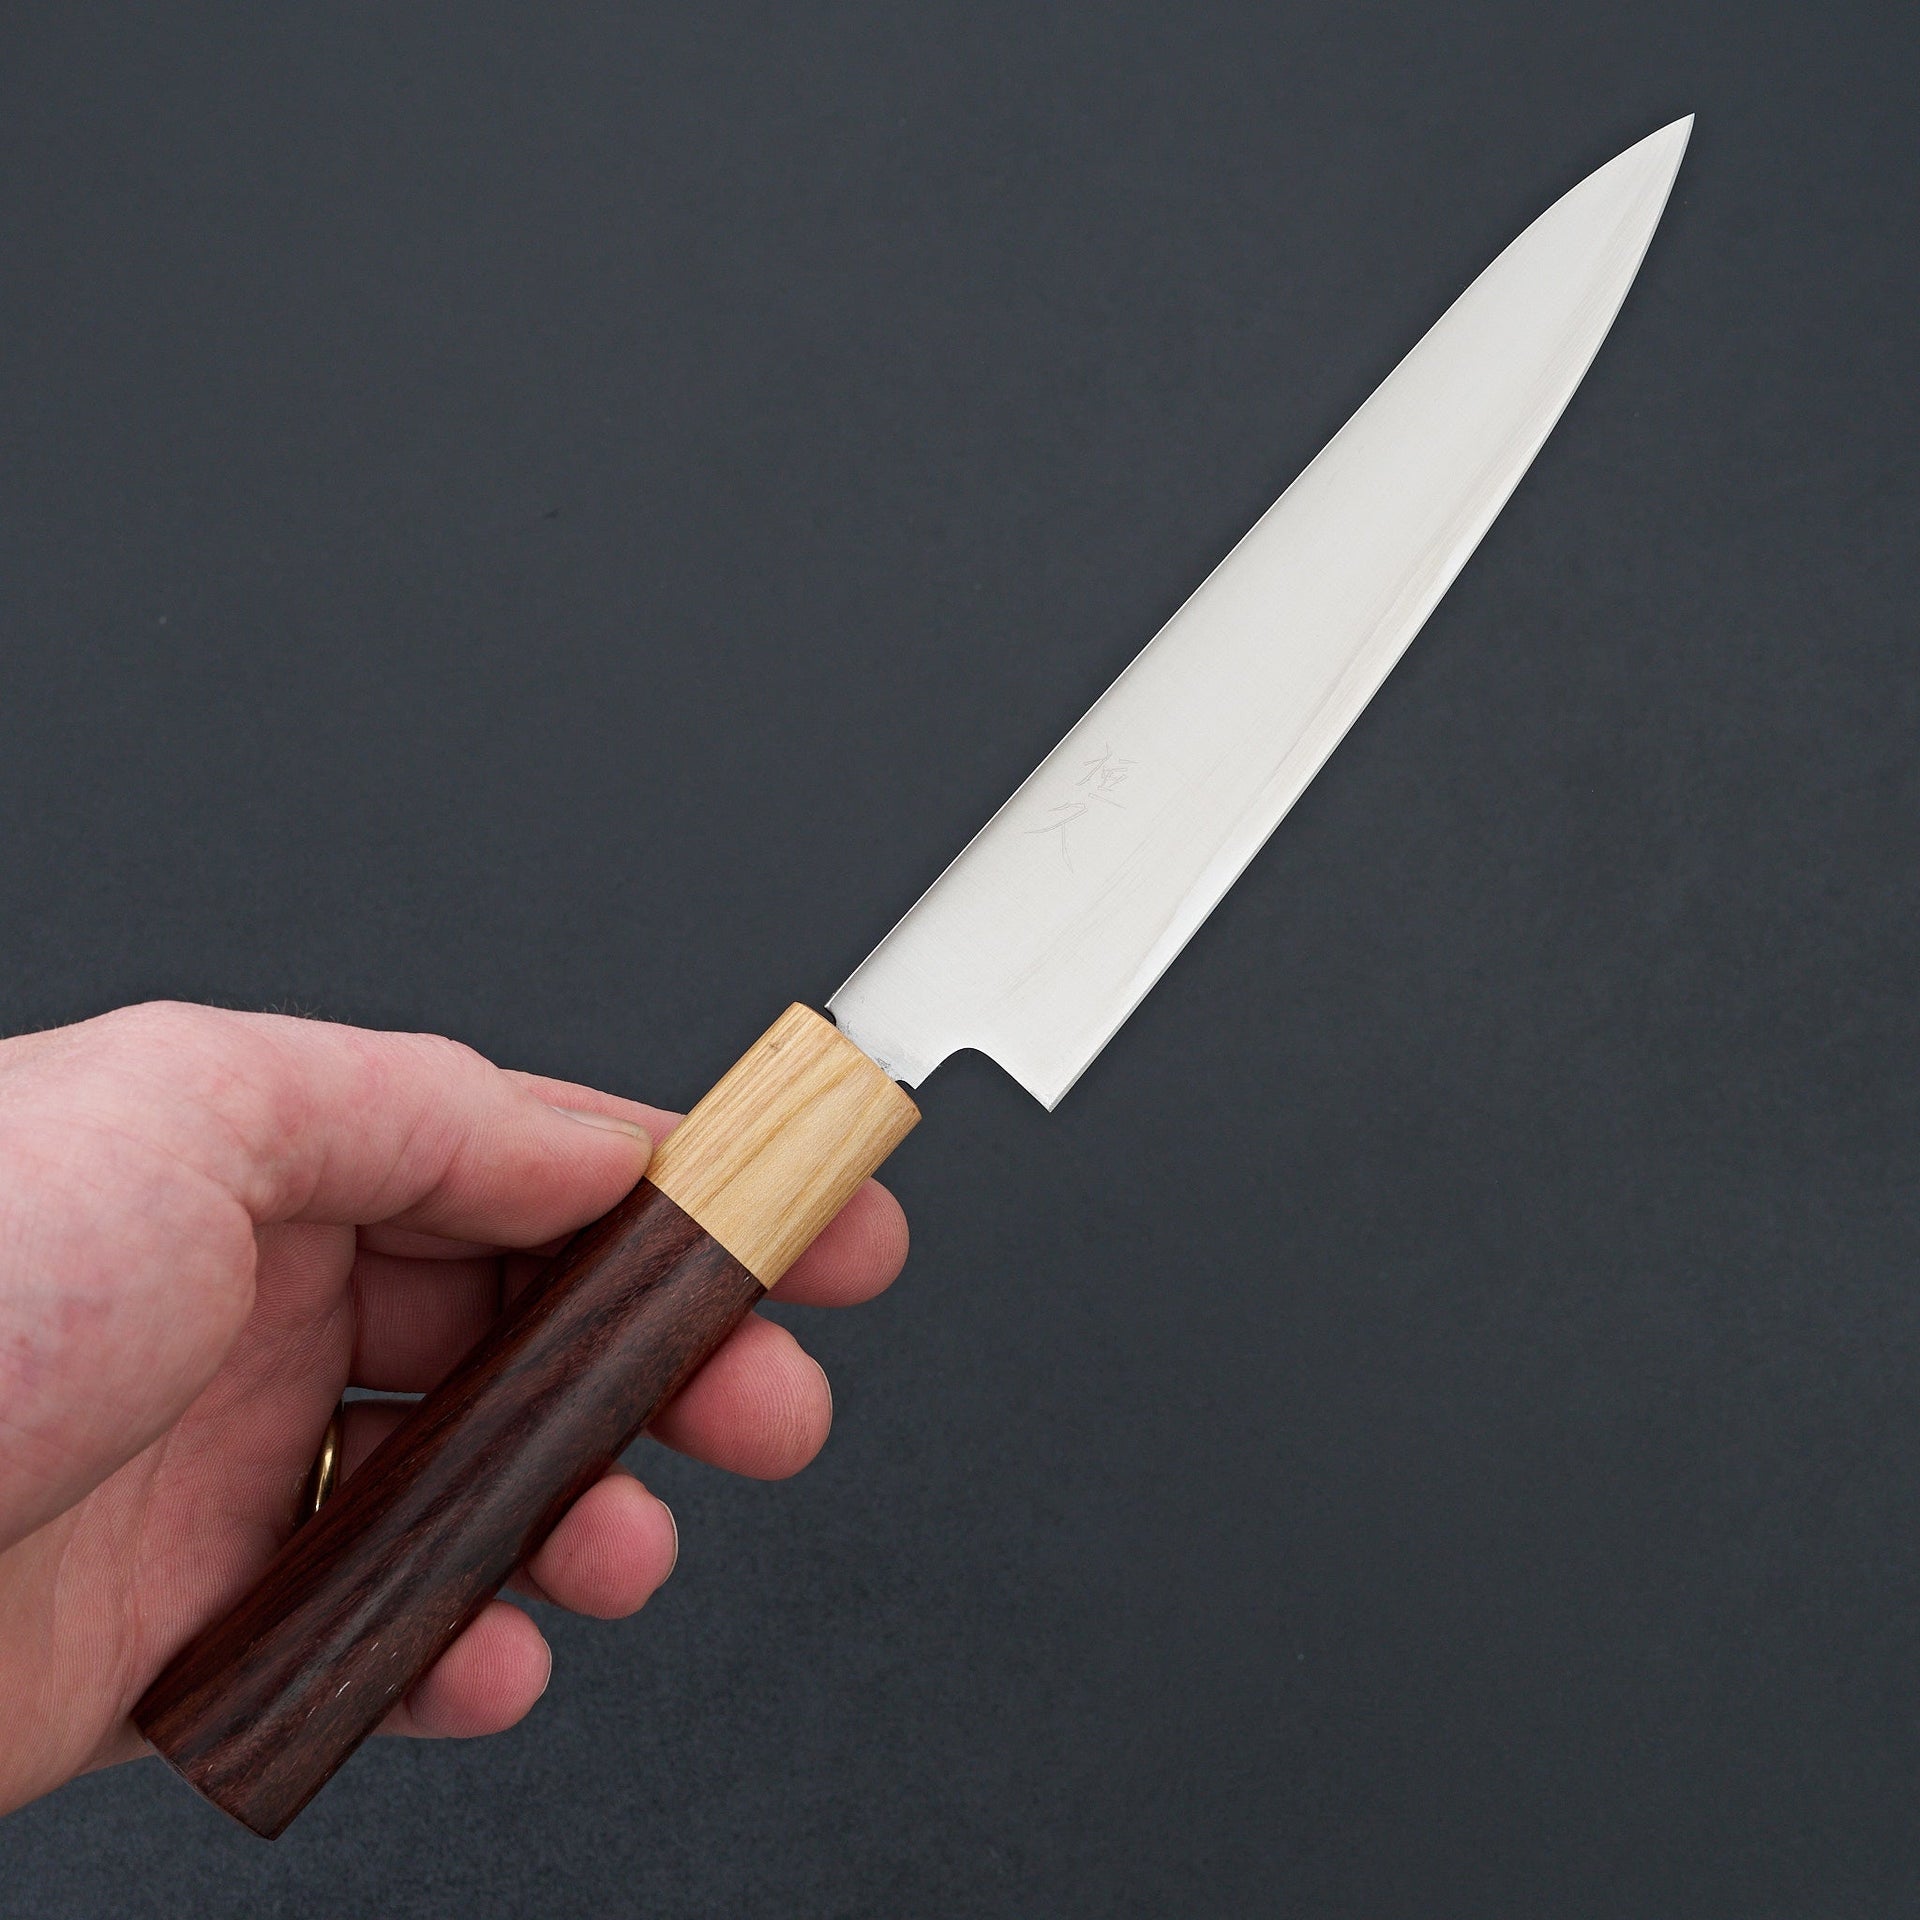 Tsunehisa VG1 Wa Petty 150mm-Knife-Tsunehisa-Carbon Knife Co